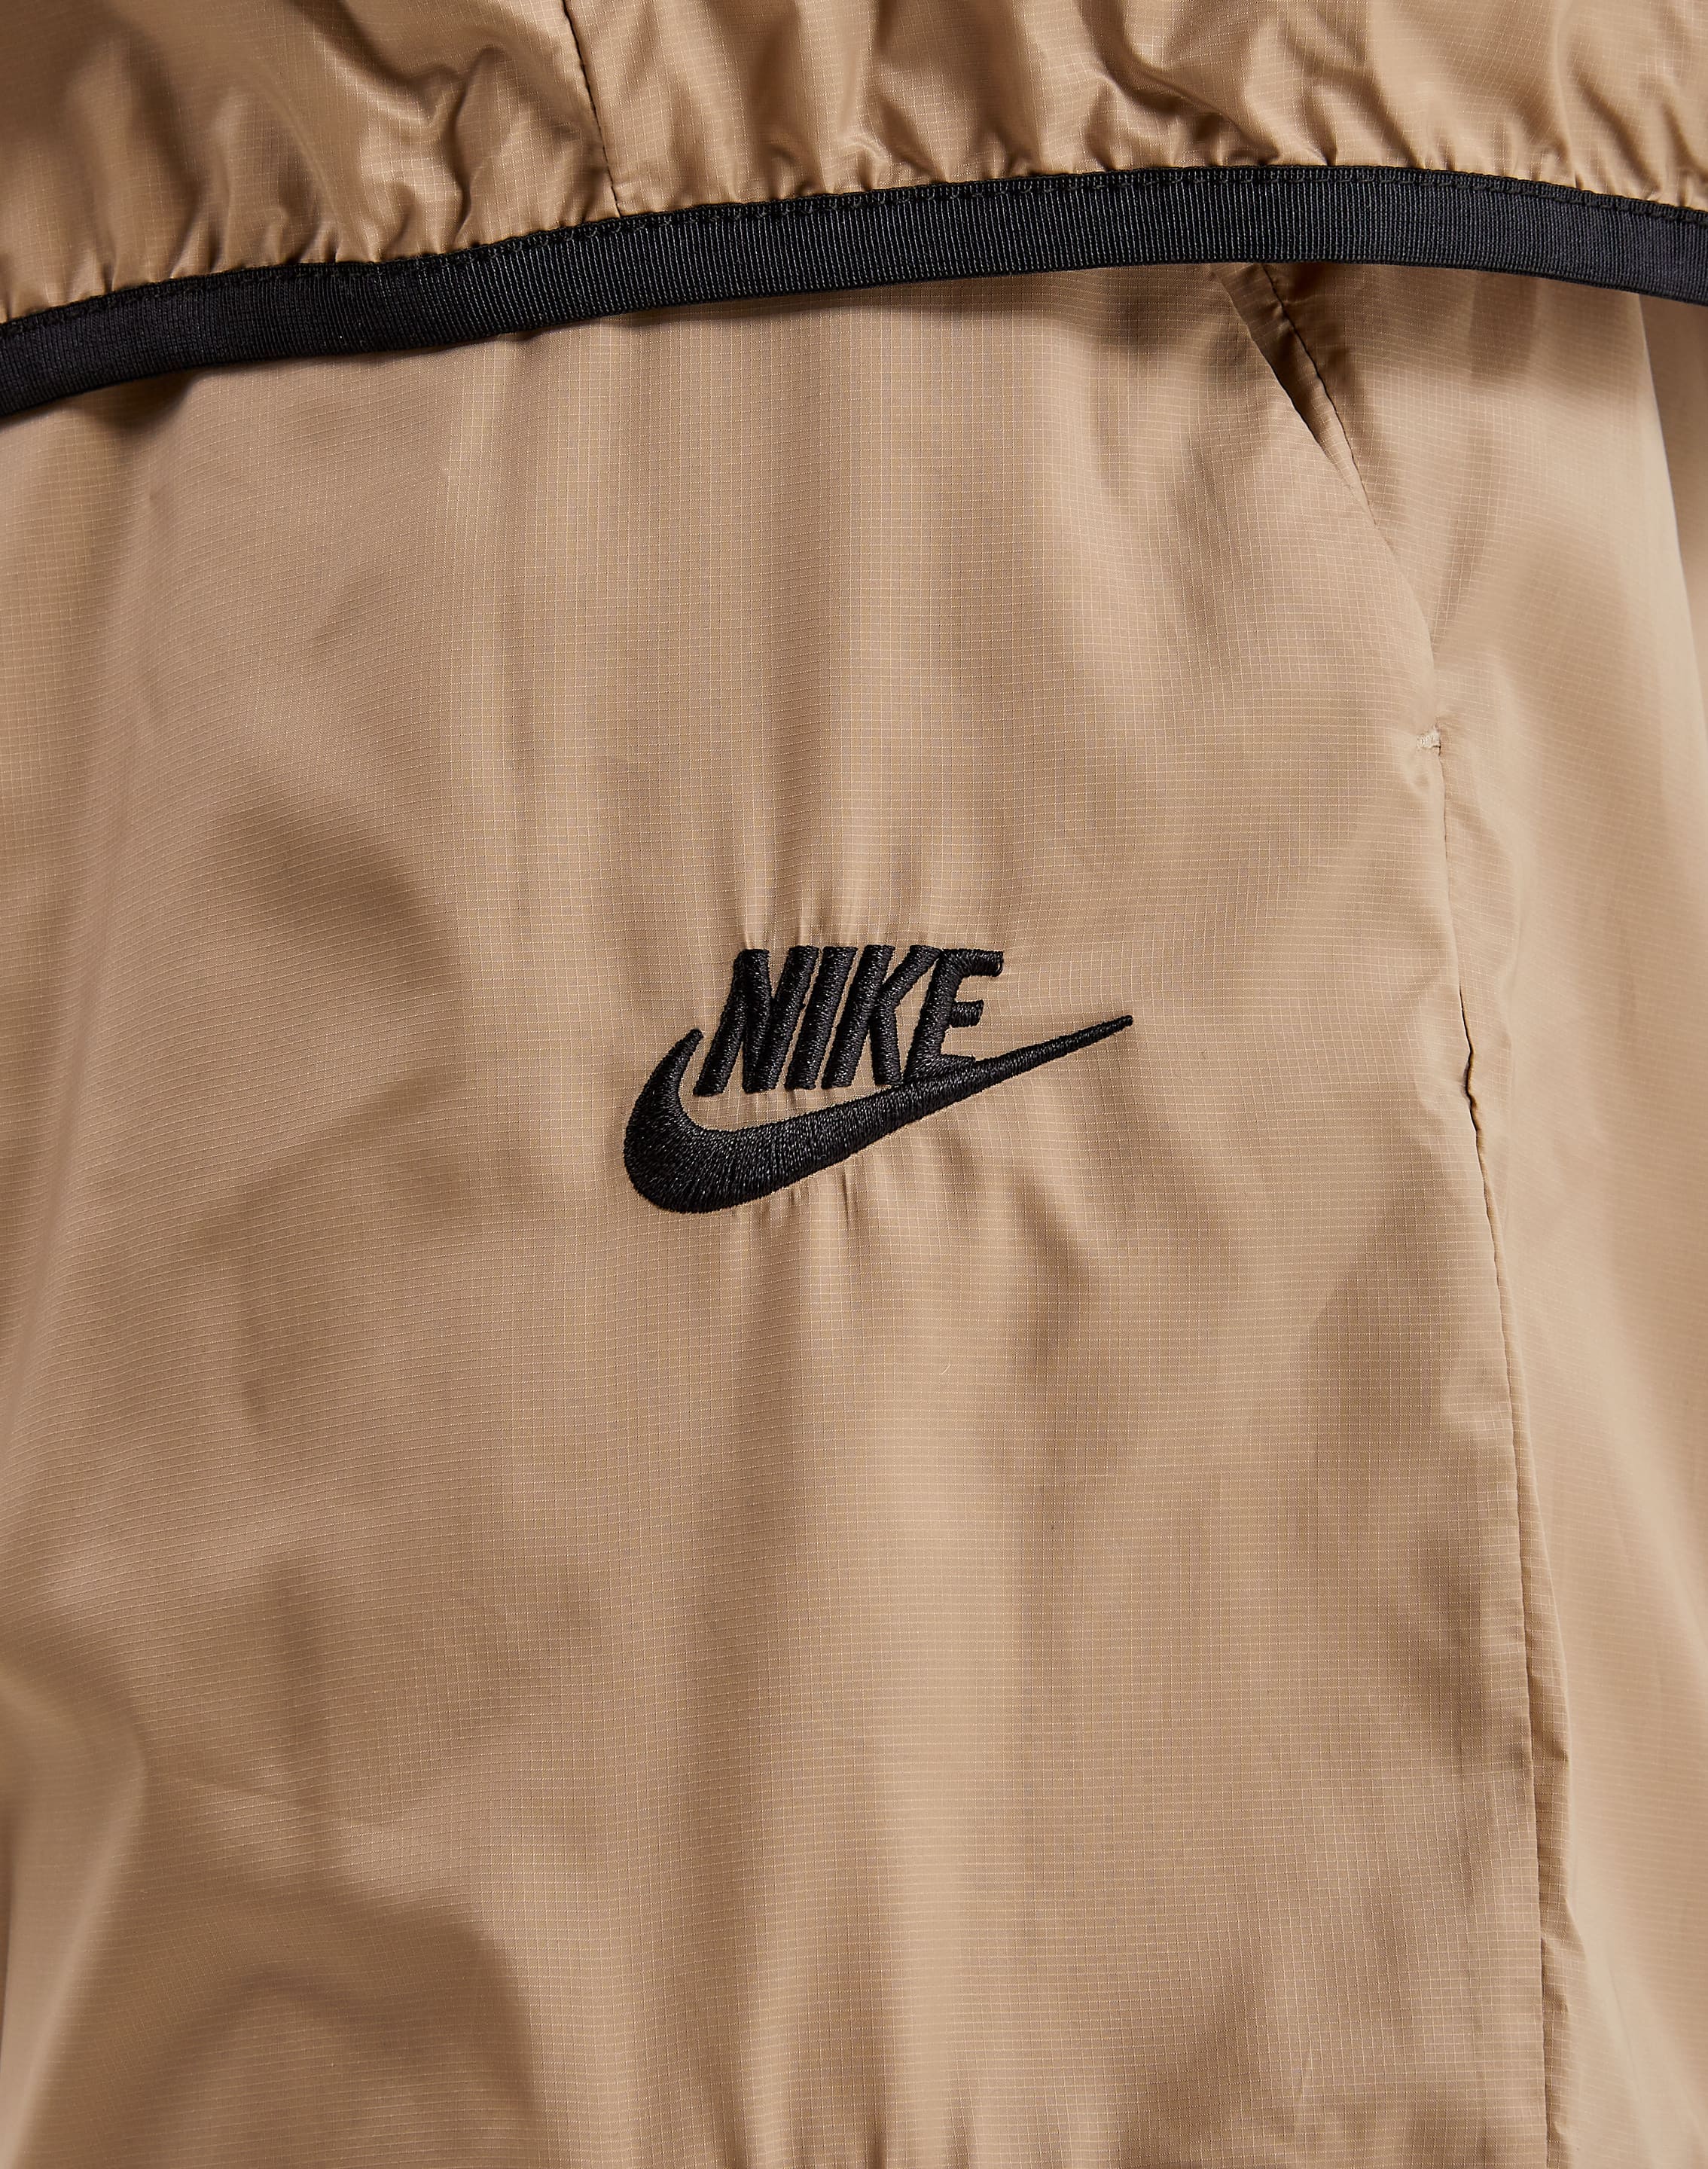 Nike Windrunner Woven Lined Pants – DTLR